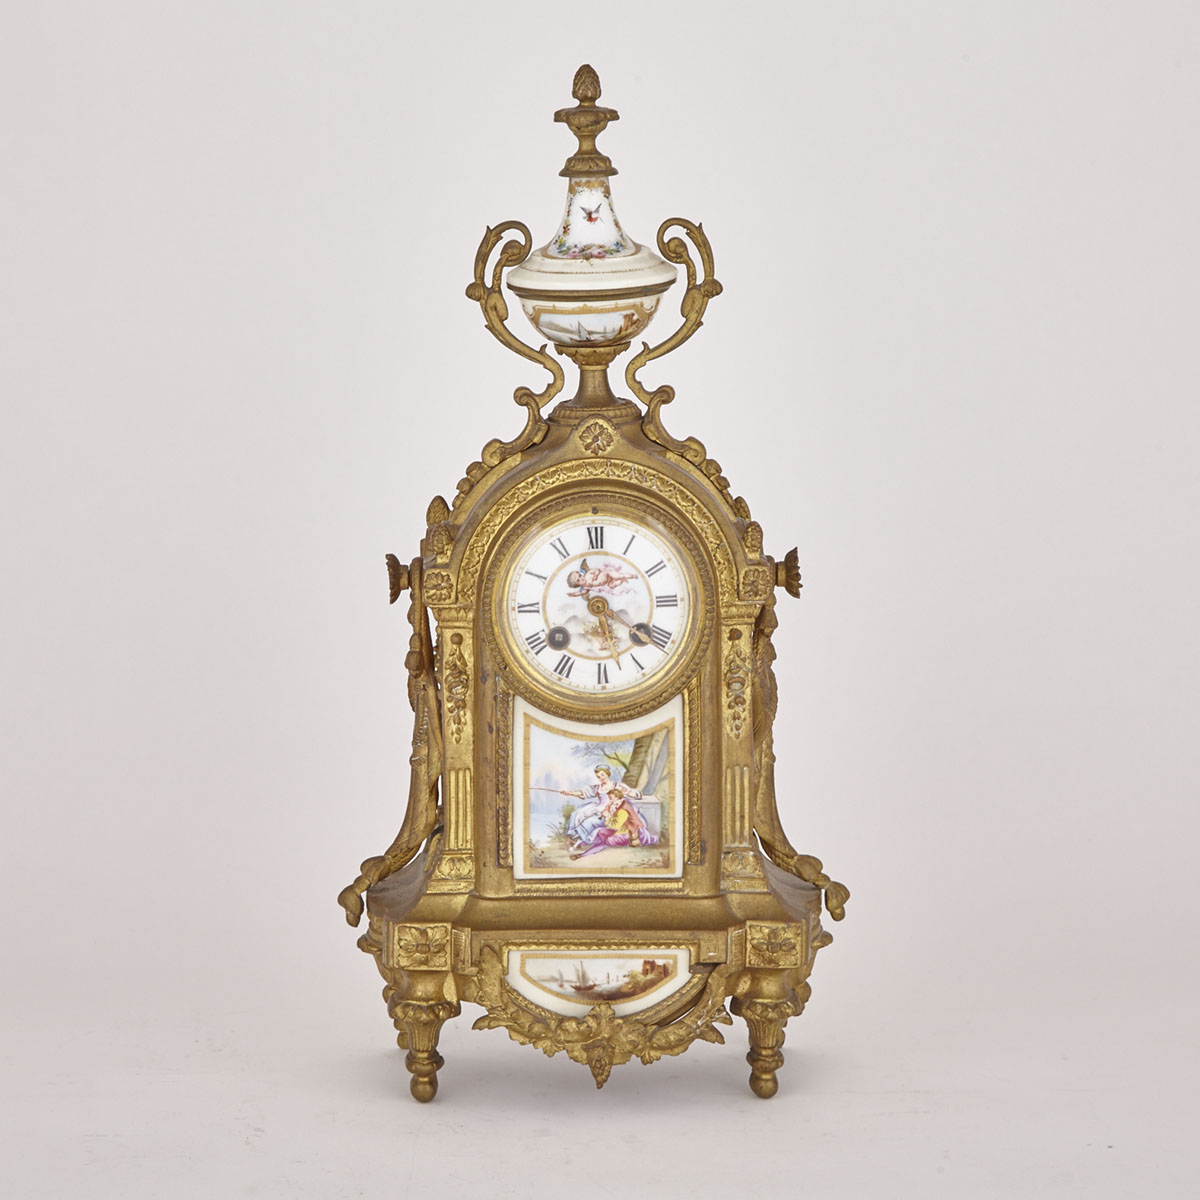 French Louis XVI Style Sevres Porcelain Mounted Gilt Bronze Mantel Clock, 19th century